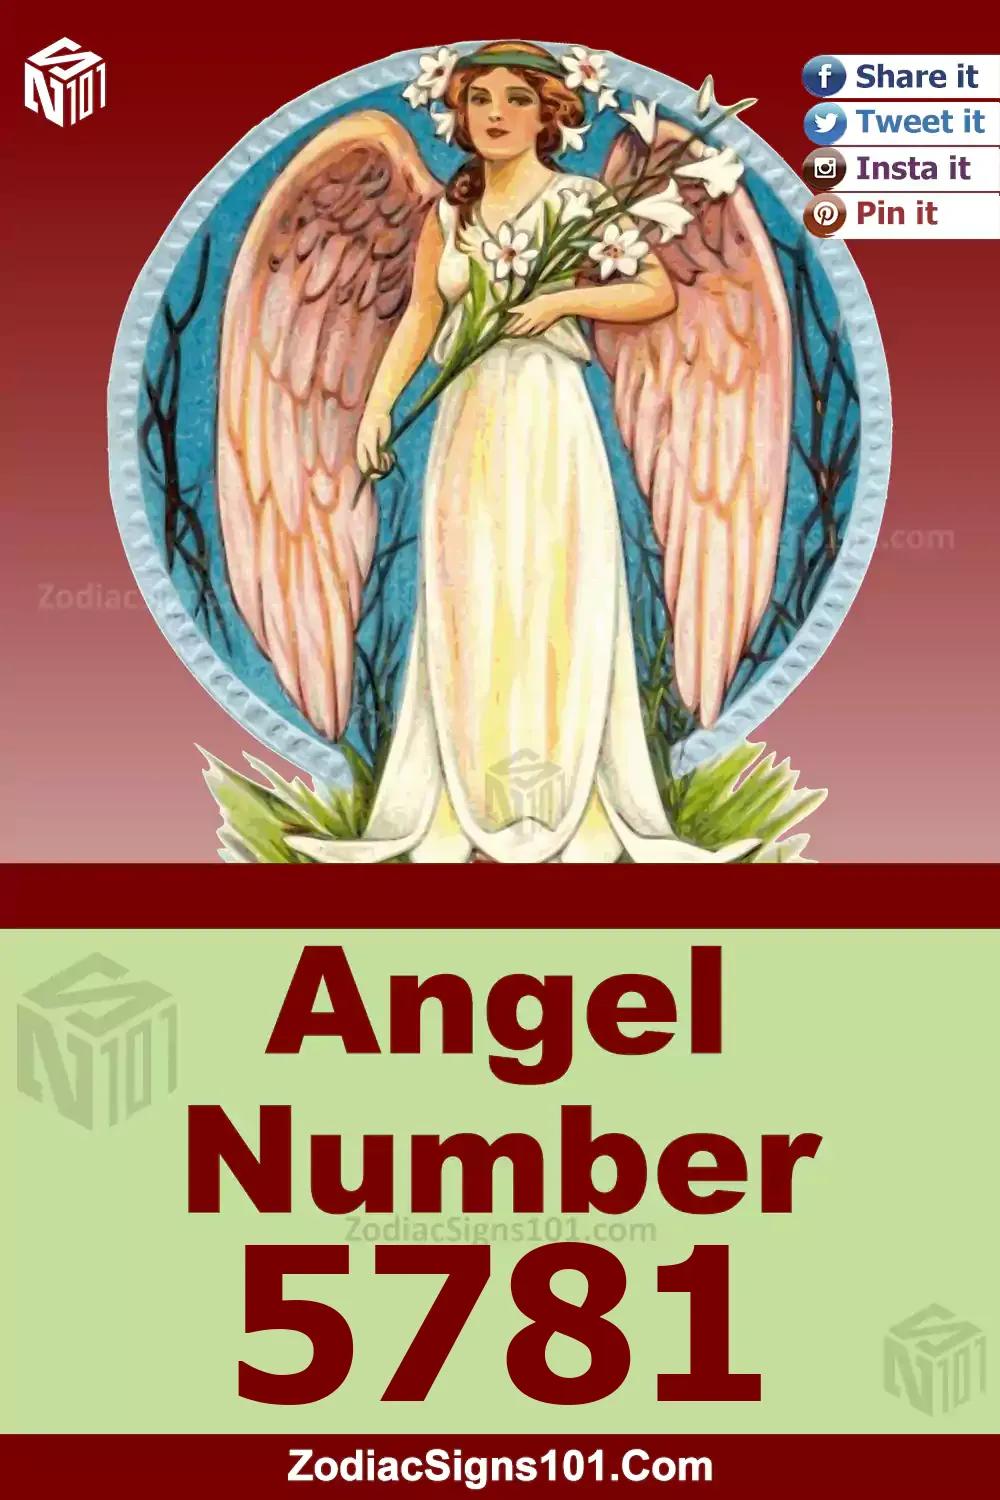 5781-Angel-Number-Meaning.jpg